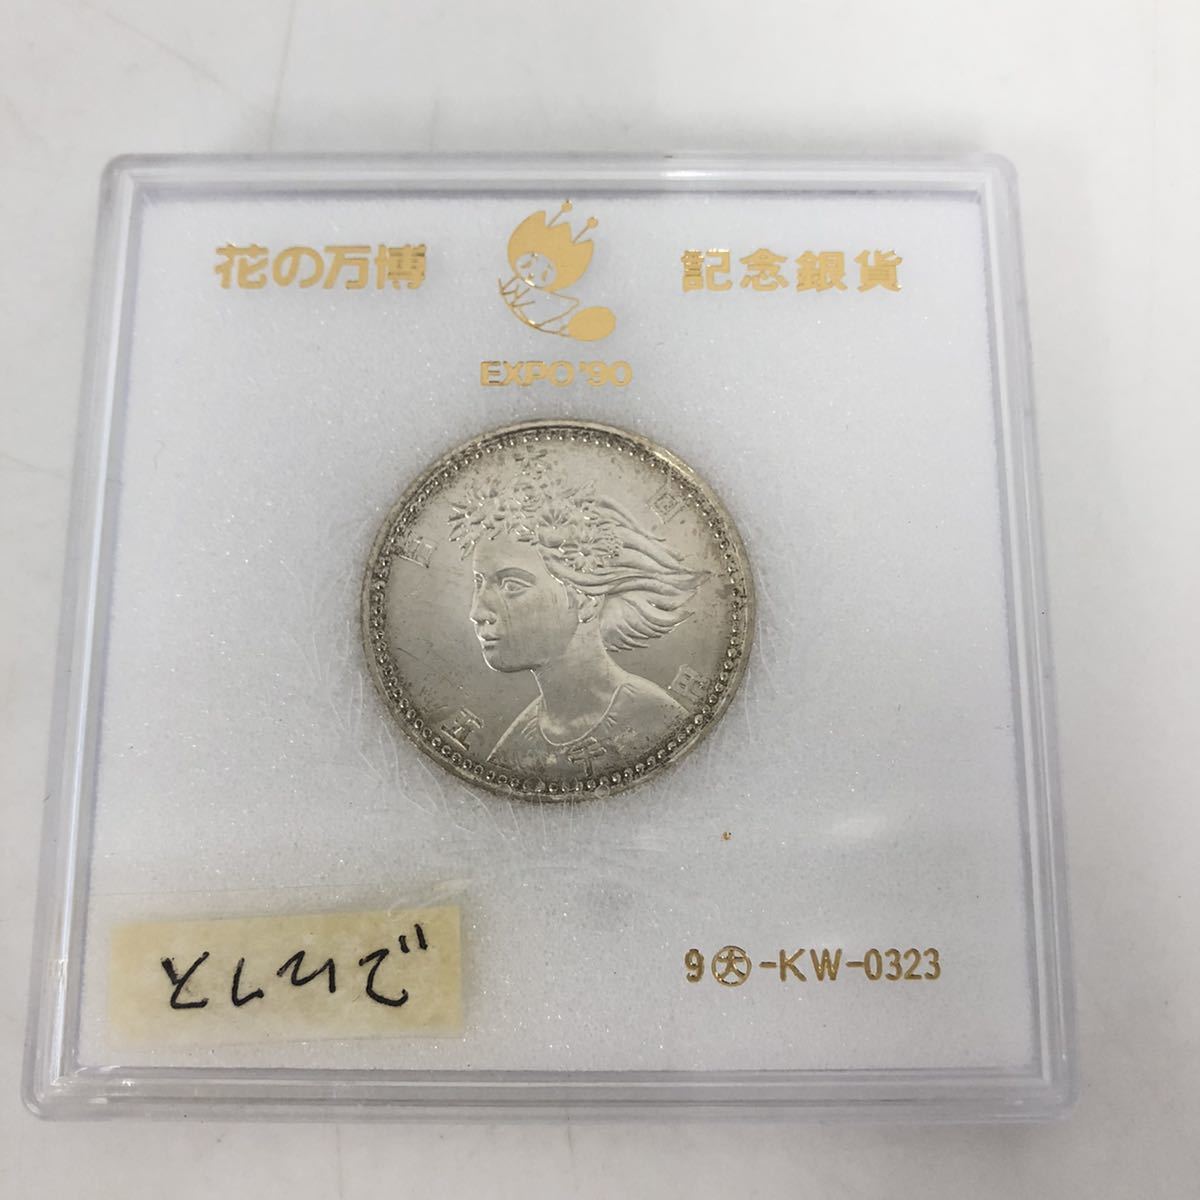 5000円銀貨/花の万博/記念銀貨/5000YEN/OSAKA EXPO'90/平成2年/日本国 